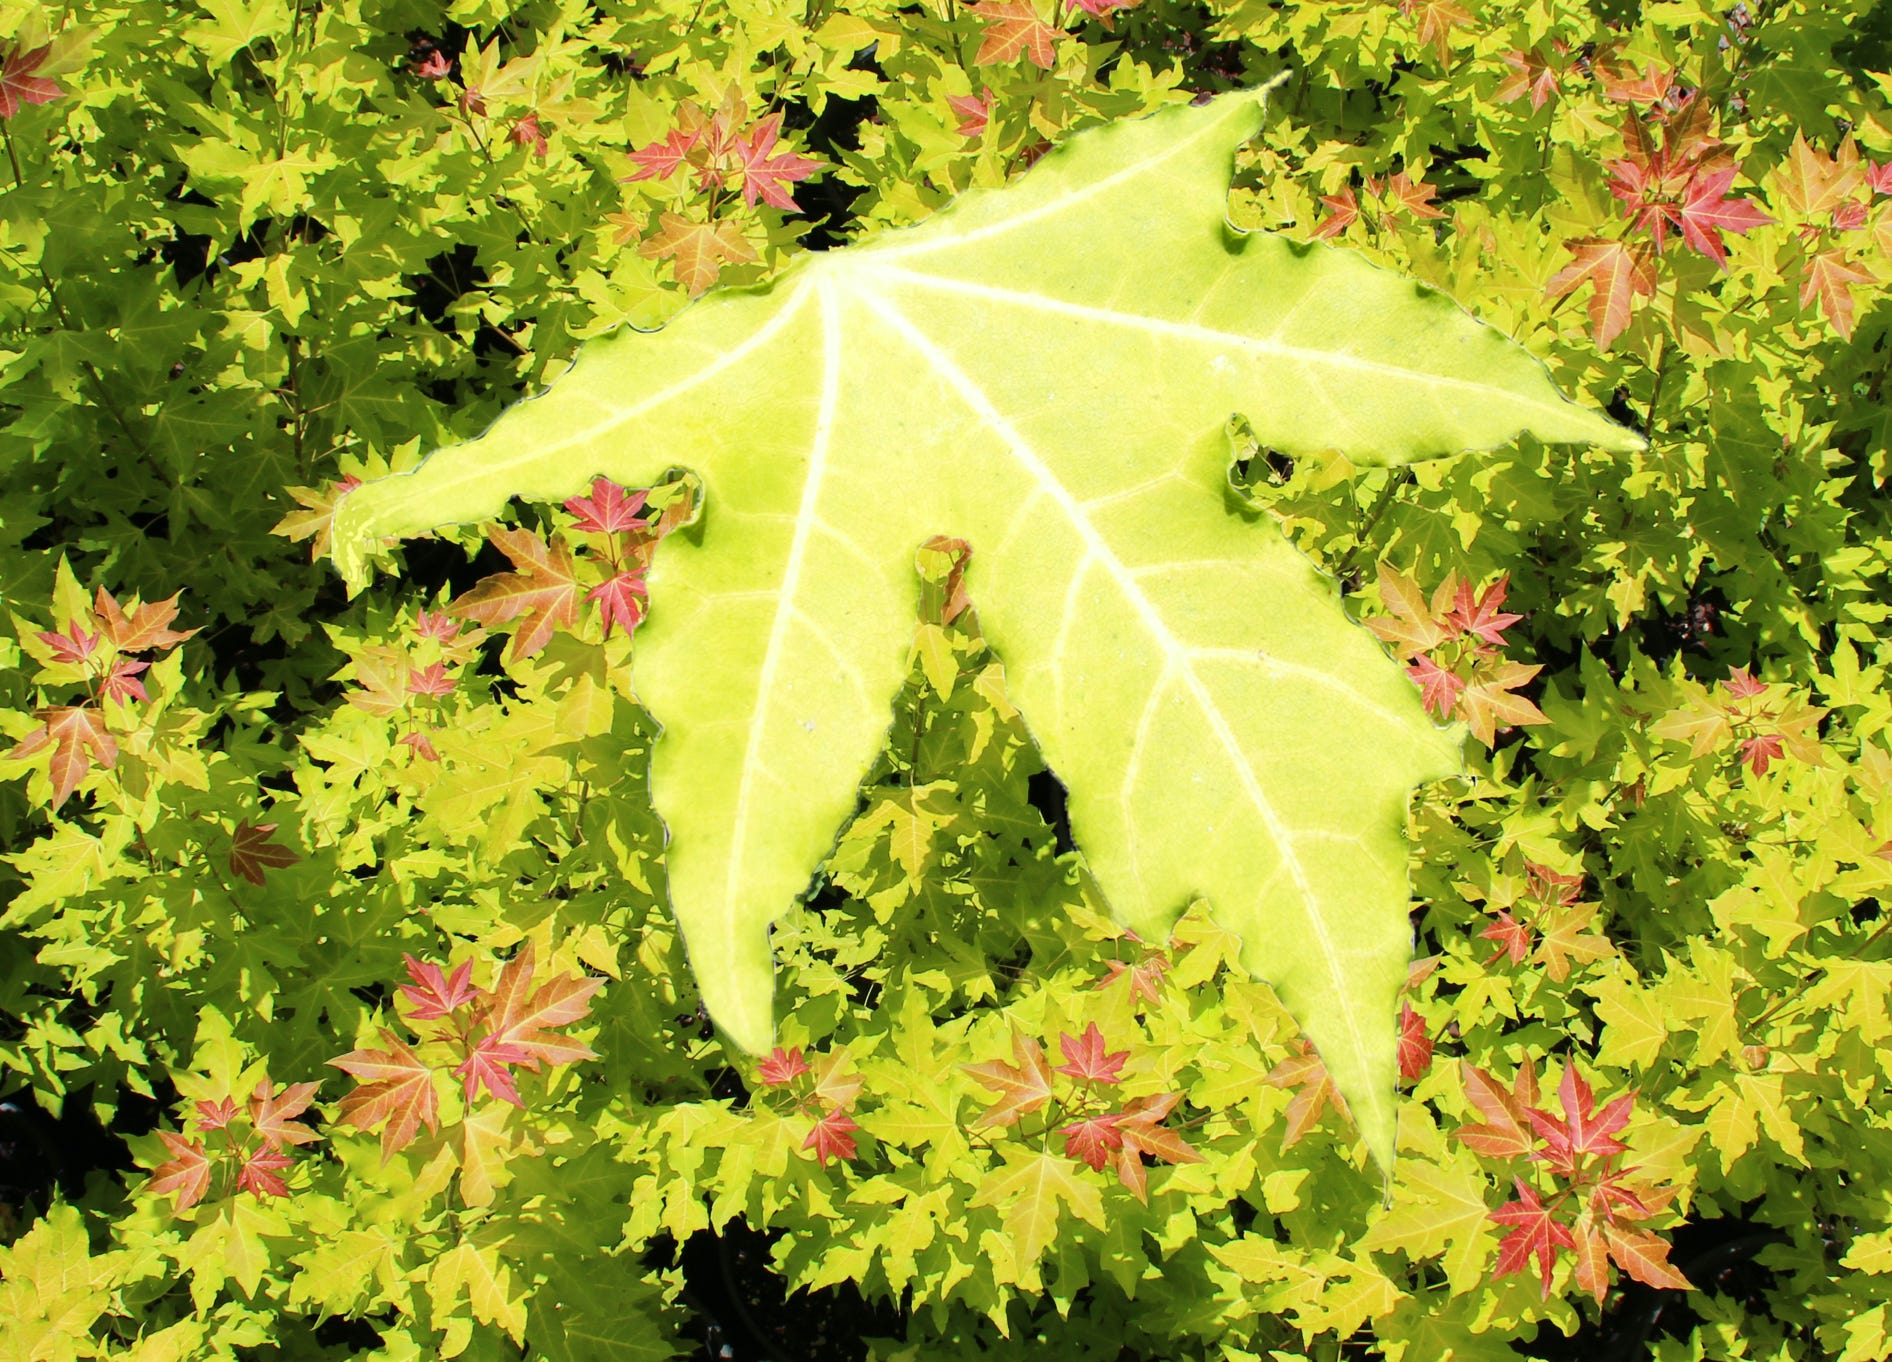 Acer truncatum Shantung maple Shandong maple tree, fall color, bonsai, metro maples, maple leeaves, information on maples